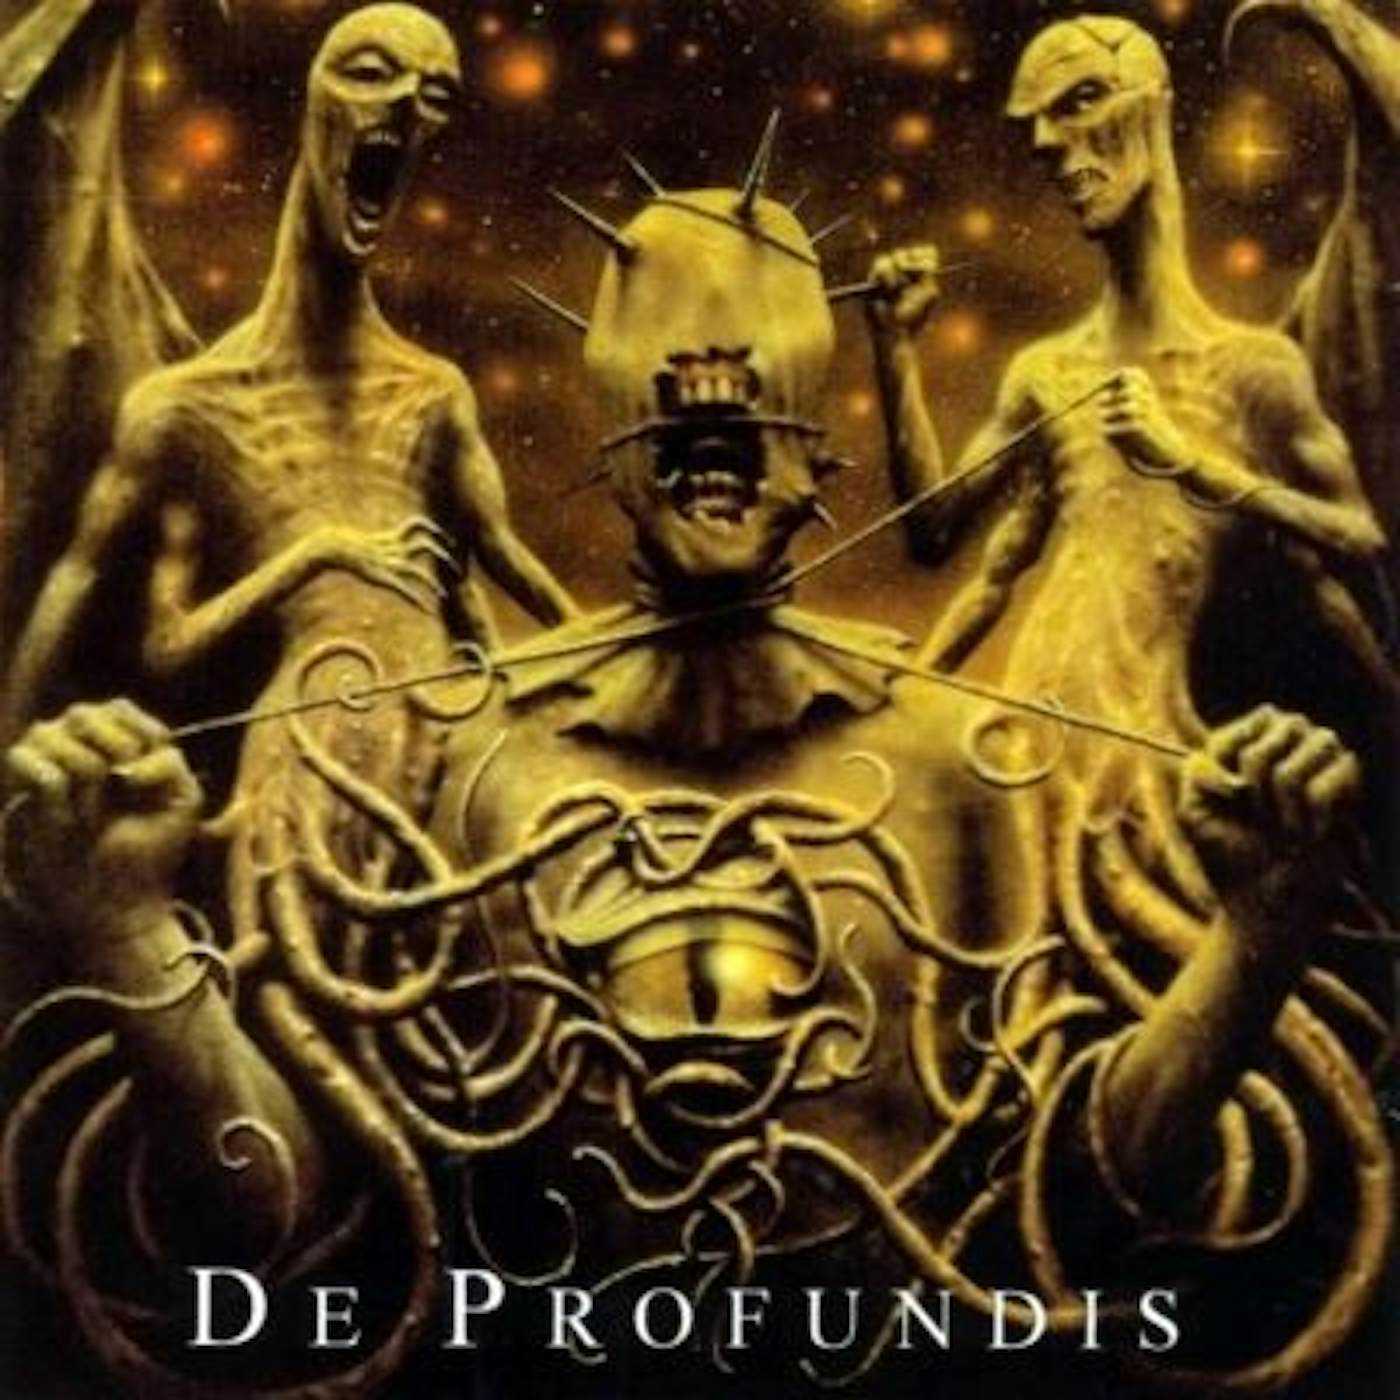 Vader DE PROFUNDIS CD